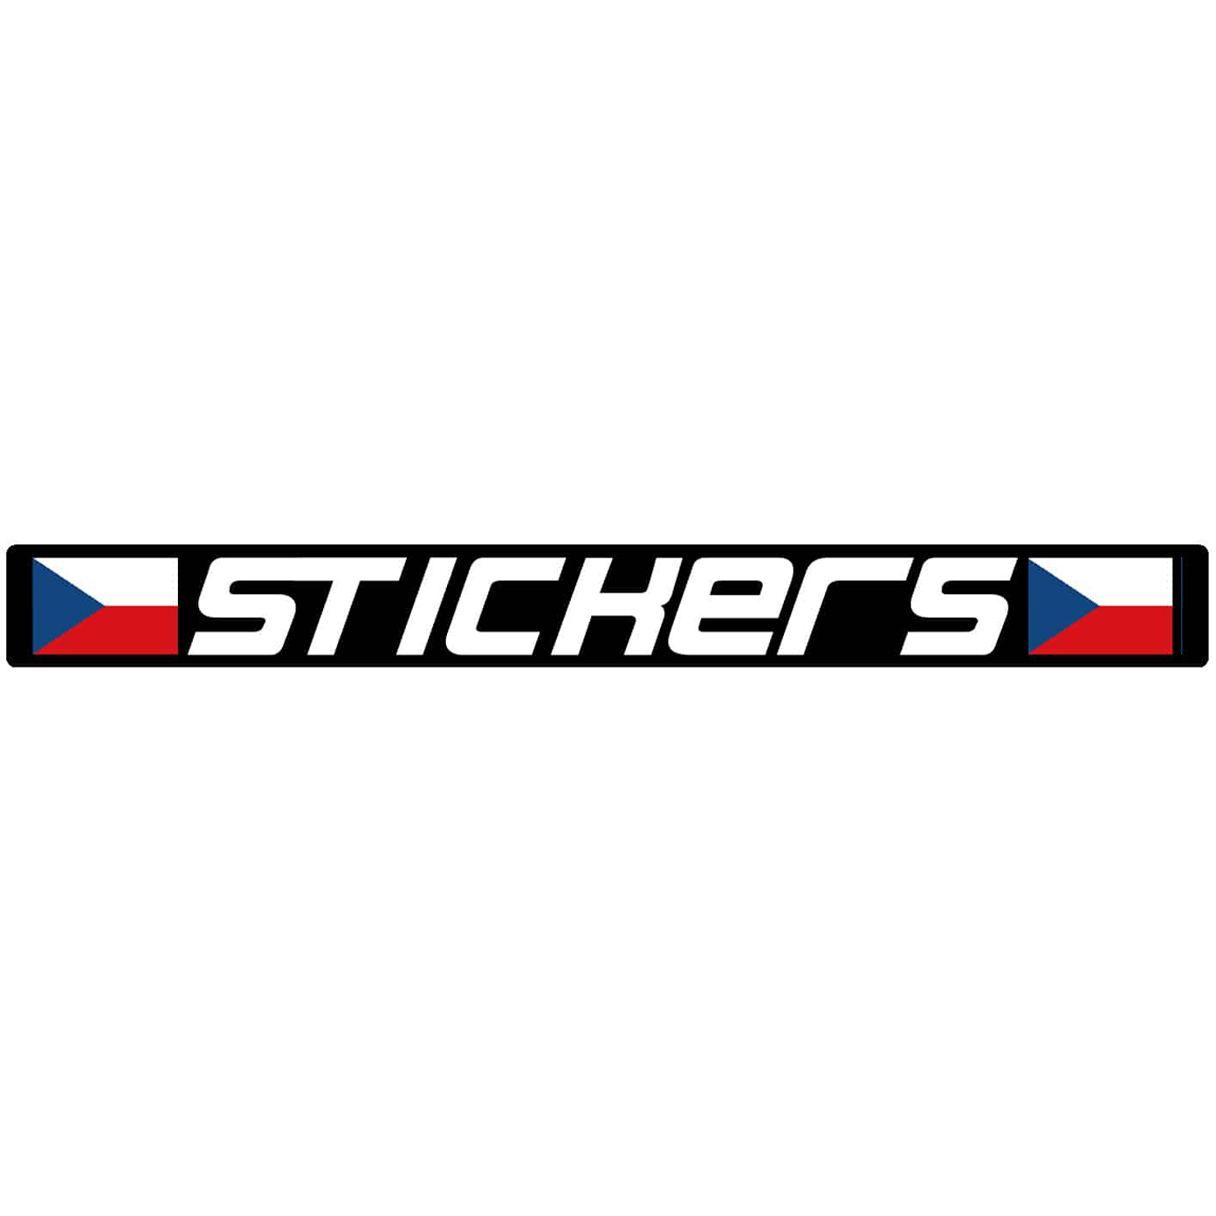 IJshockeystickers - type S2 (2× logo's + tekst)